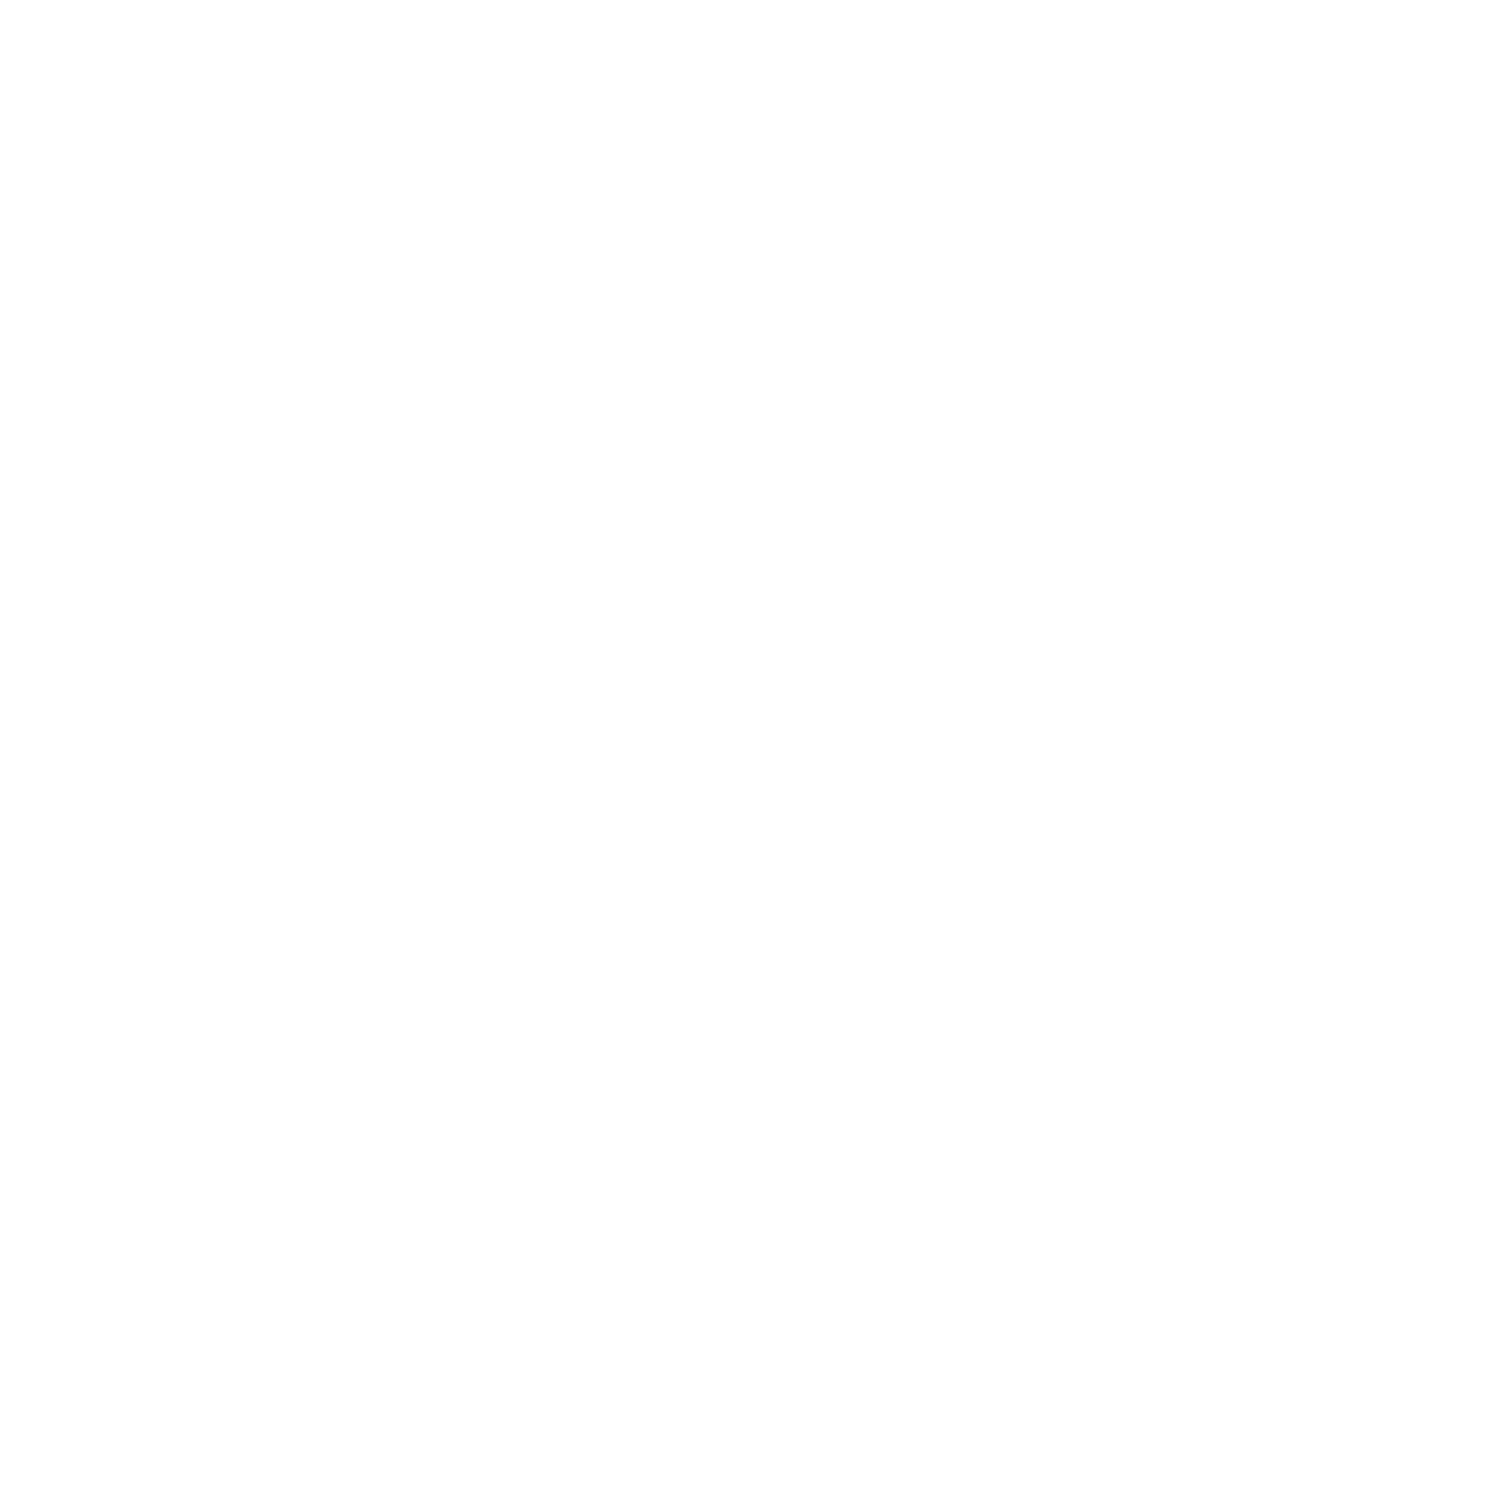 White Engineering, LLC